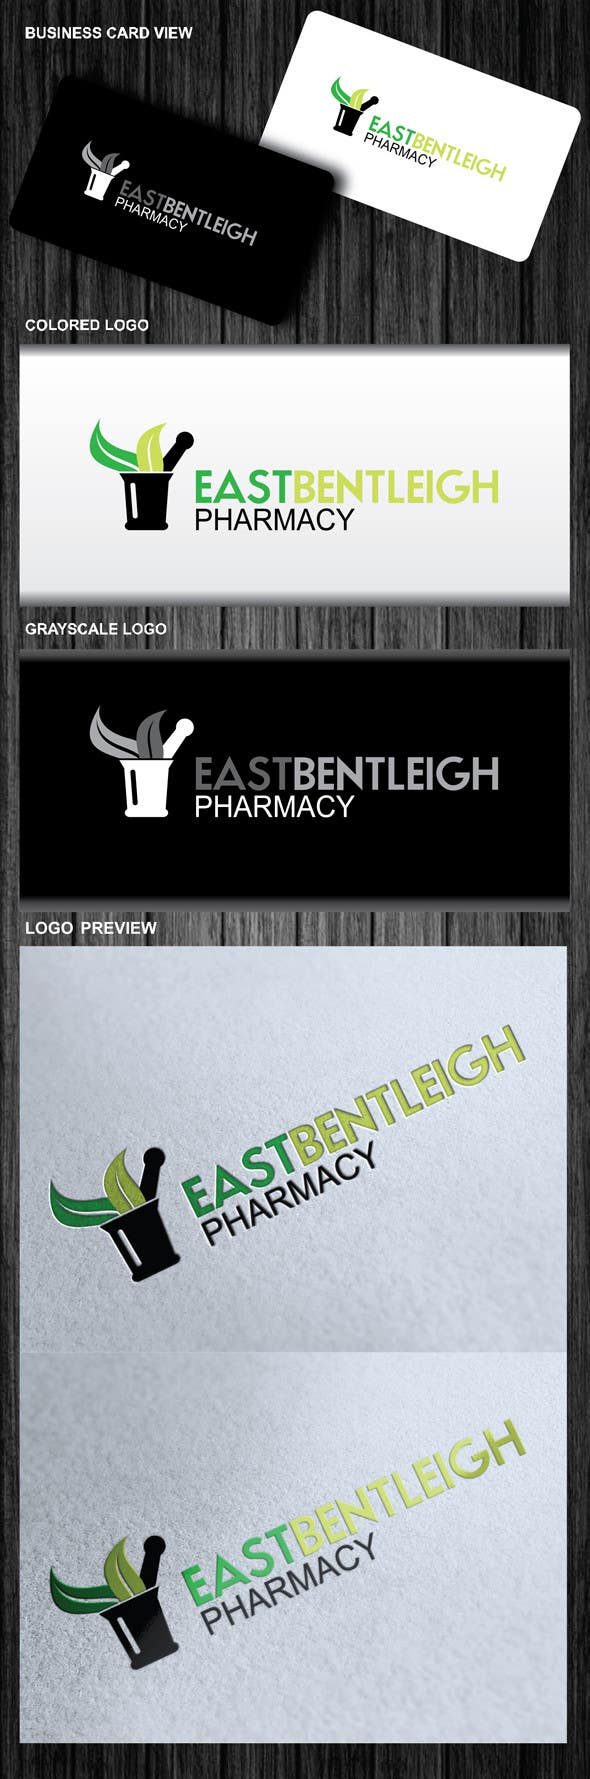 Intrarea #98 pentru concursul „                                                Logo Design for East Bentleigh Pharmacy
                                            ”